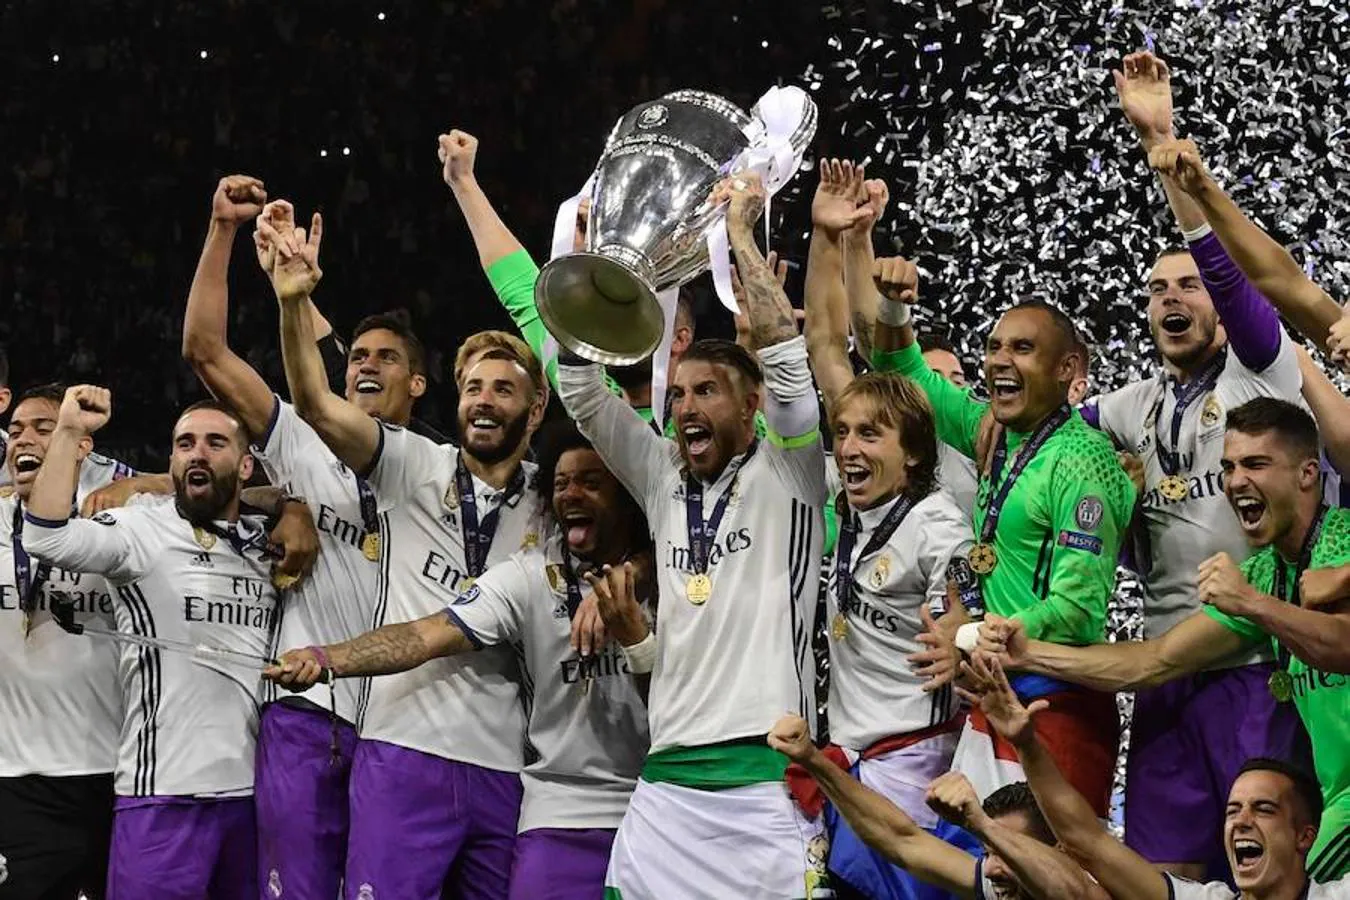 Sergio Ramos levanta la segunda Champions League consecutiva. El Real Madrid ganó en CardifF su duodécima Champions League, su segundao título consecutivo